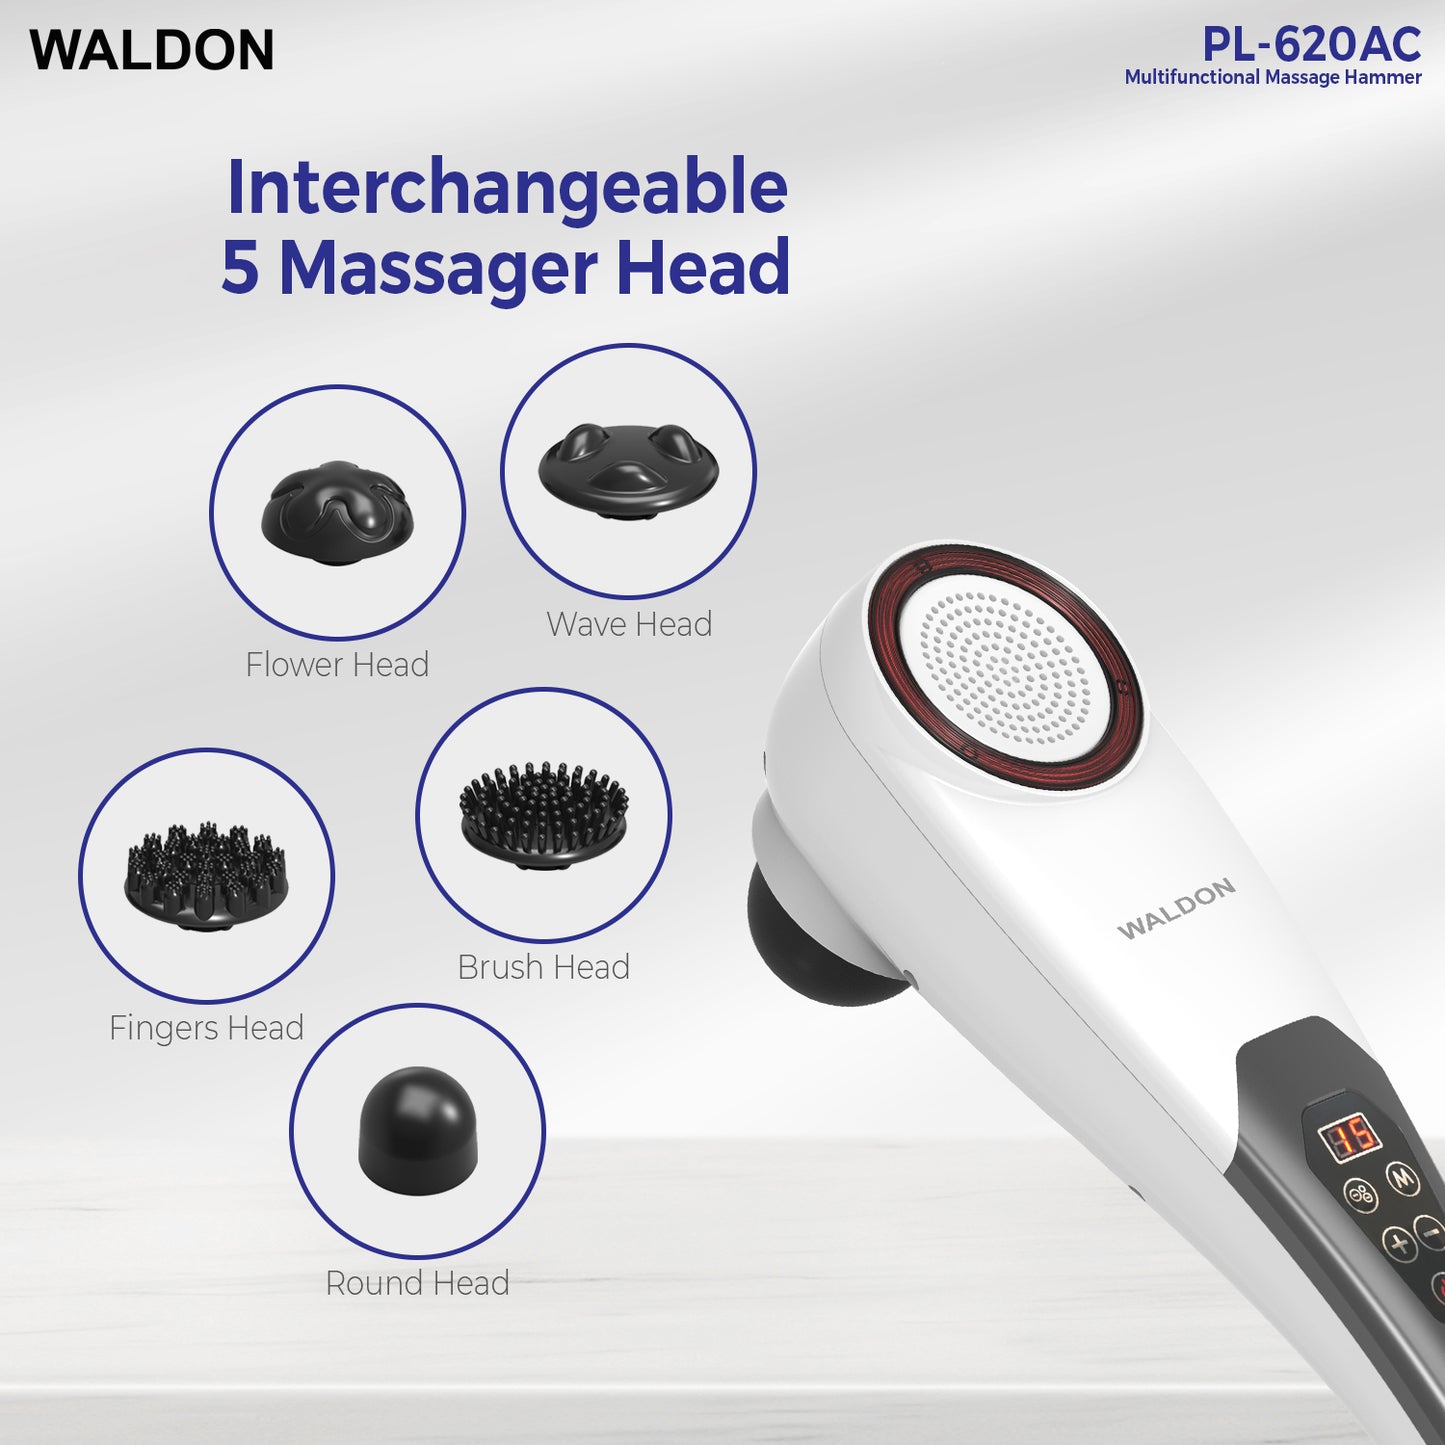 Waldon Multifunctional Massage Hammer PL-620AC